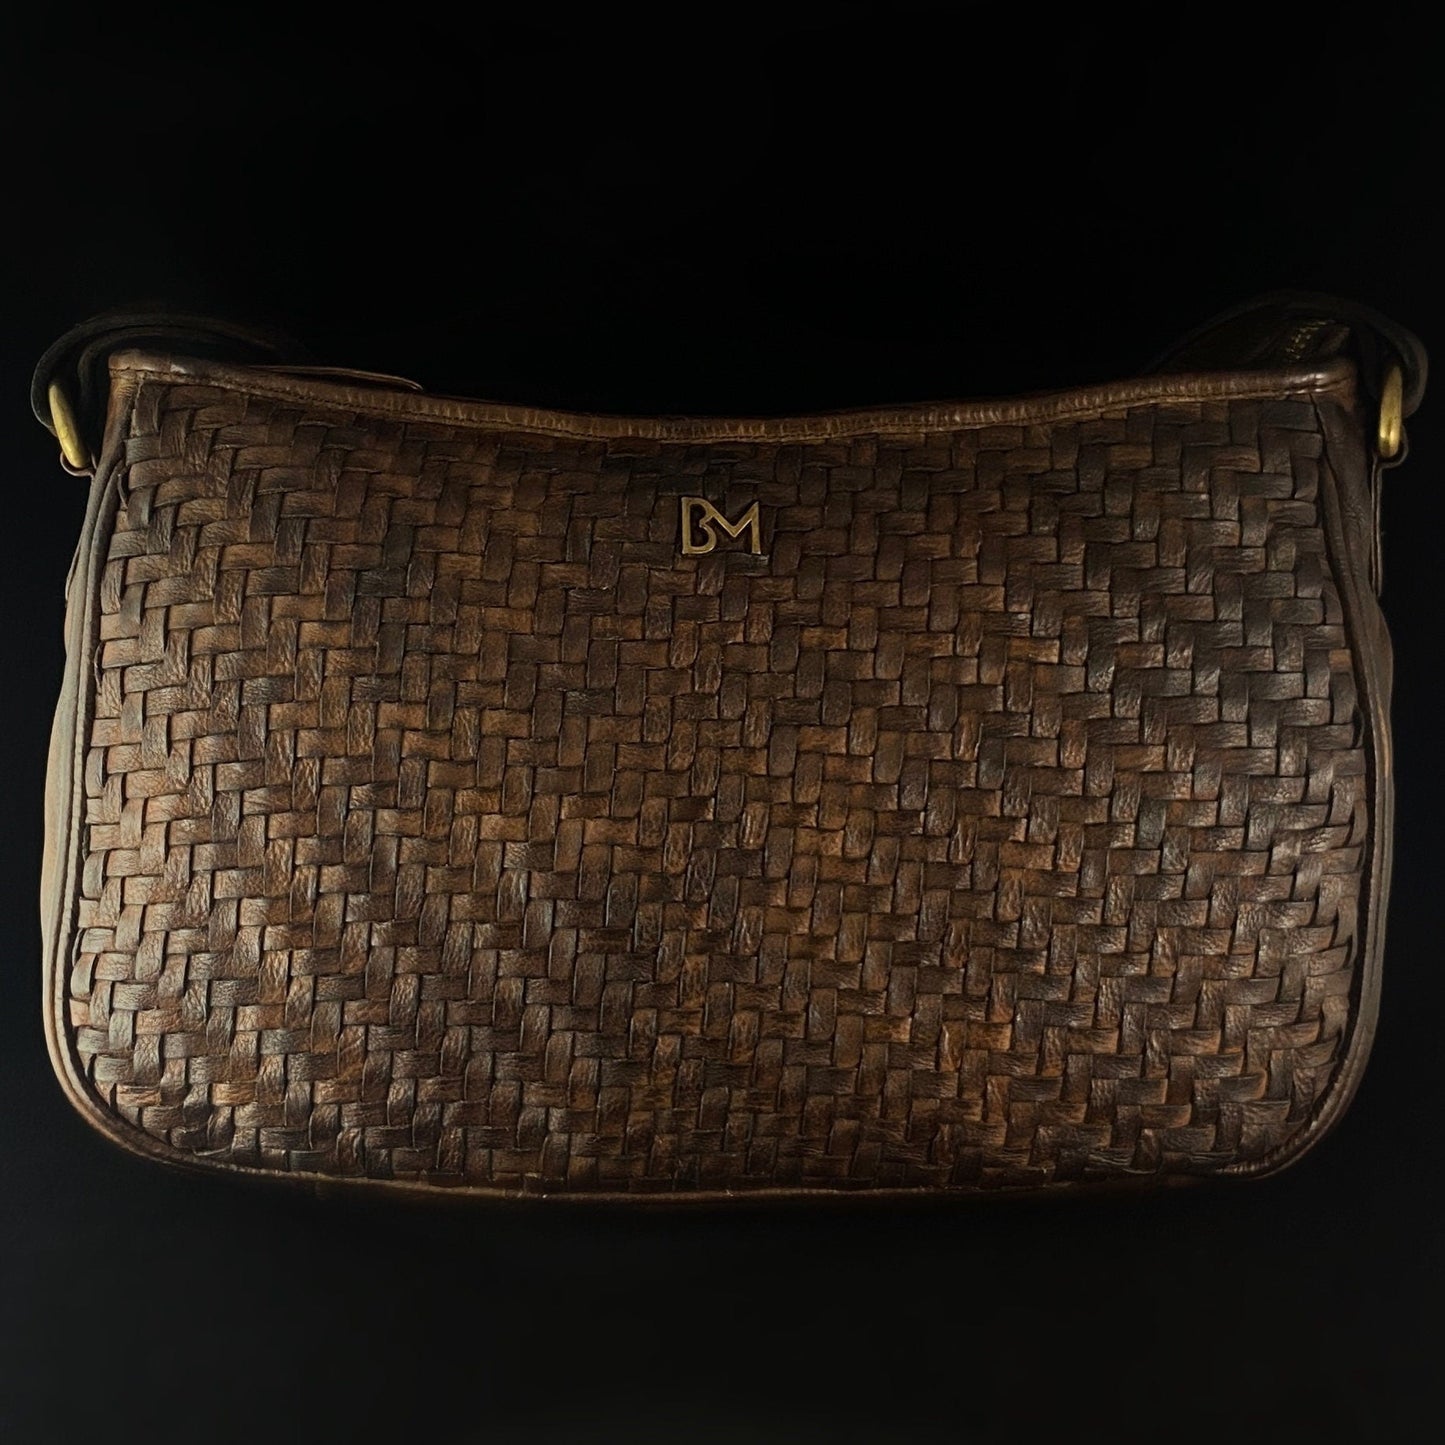 Genuine Italian Leather Handbag - Dark Brown, Woven Front